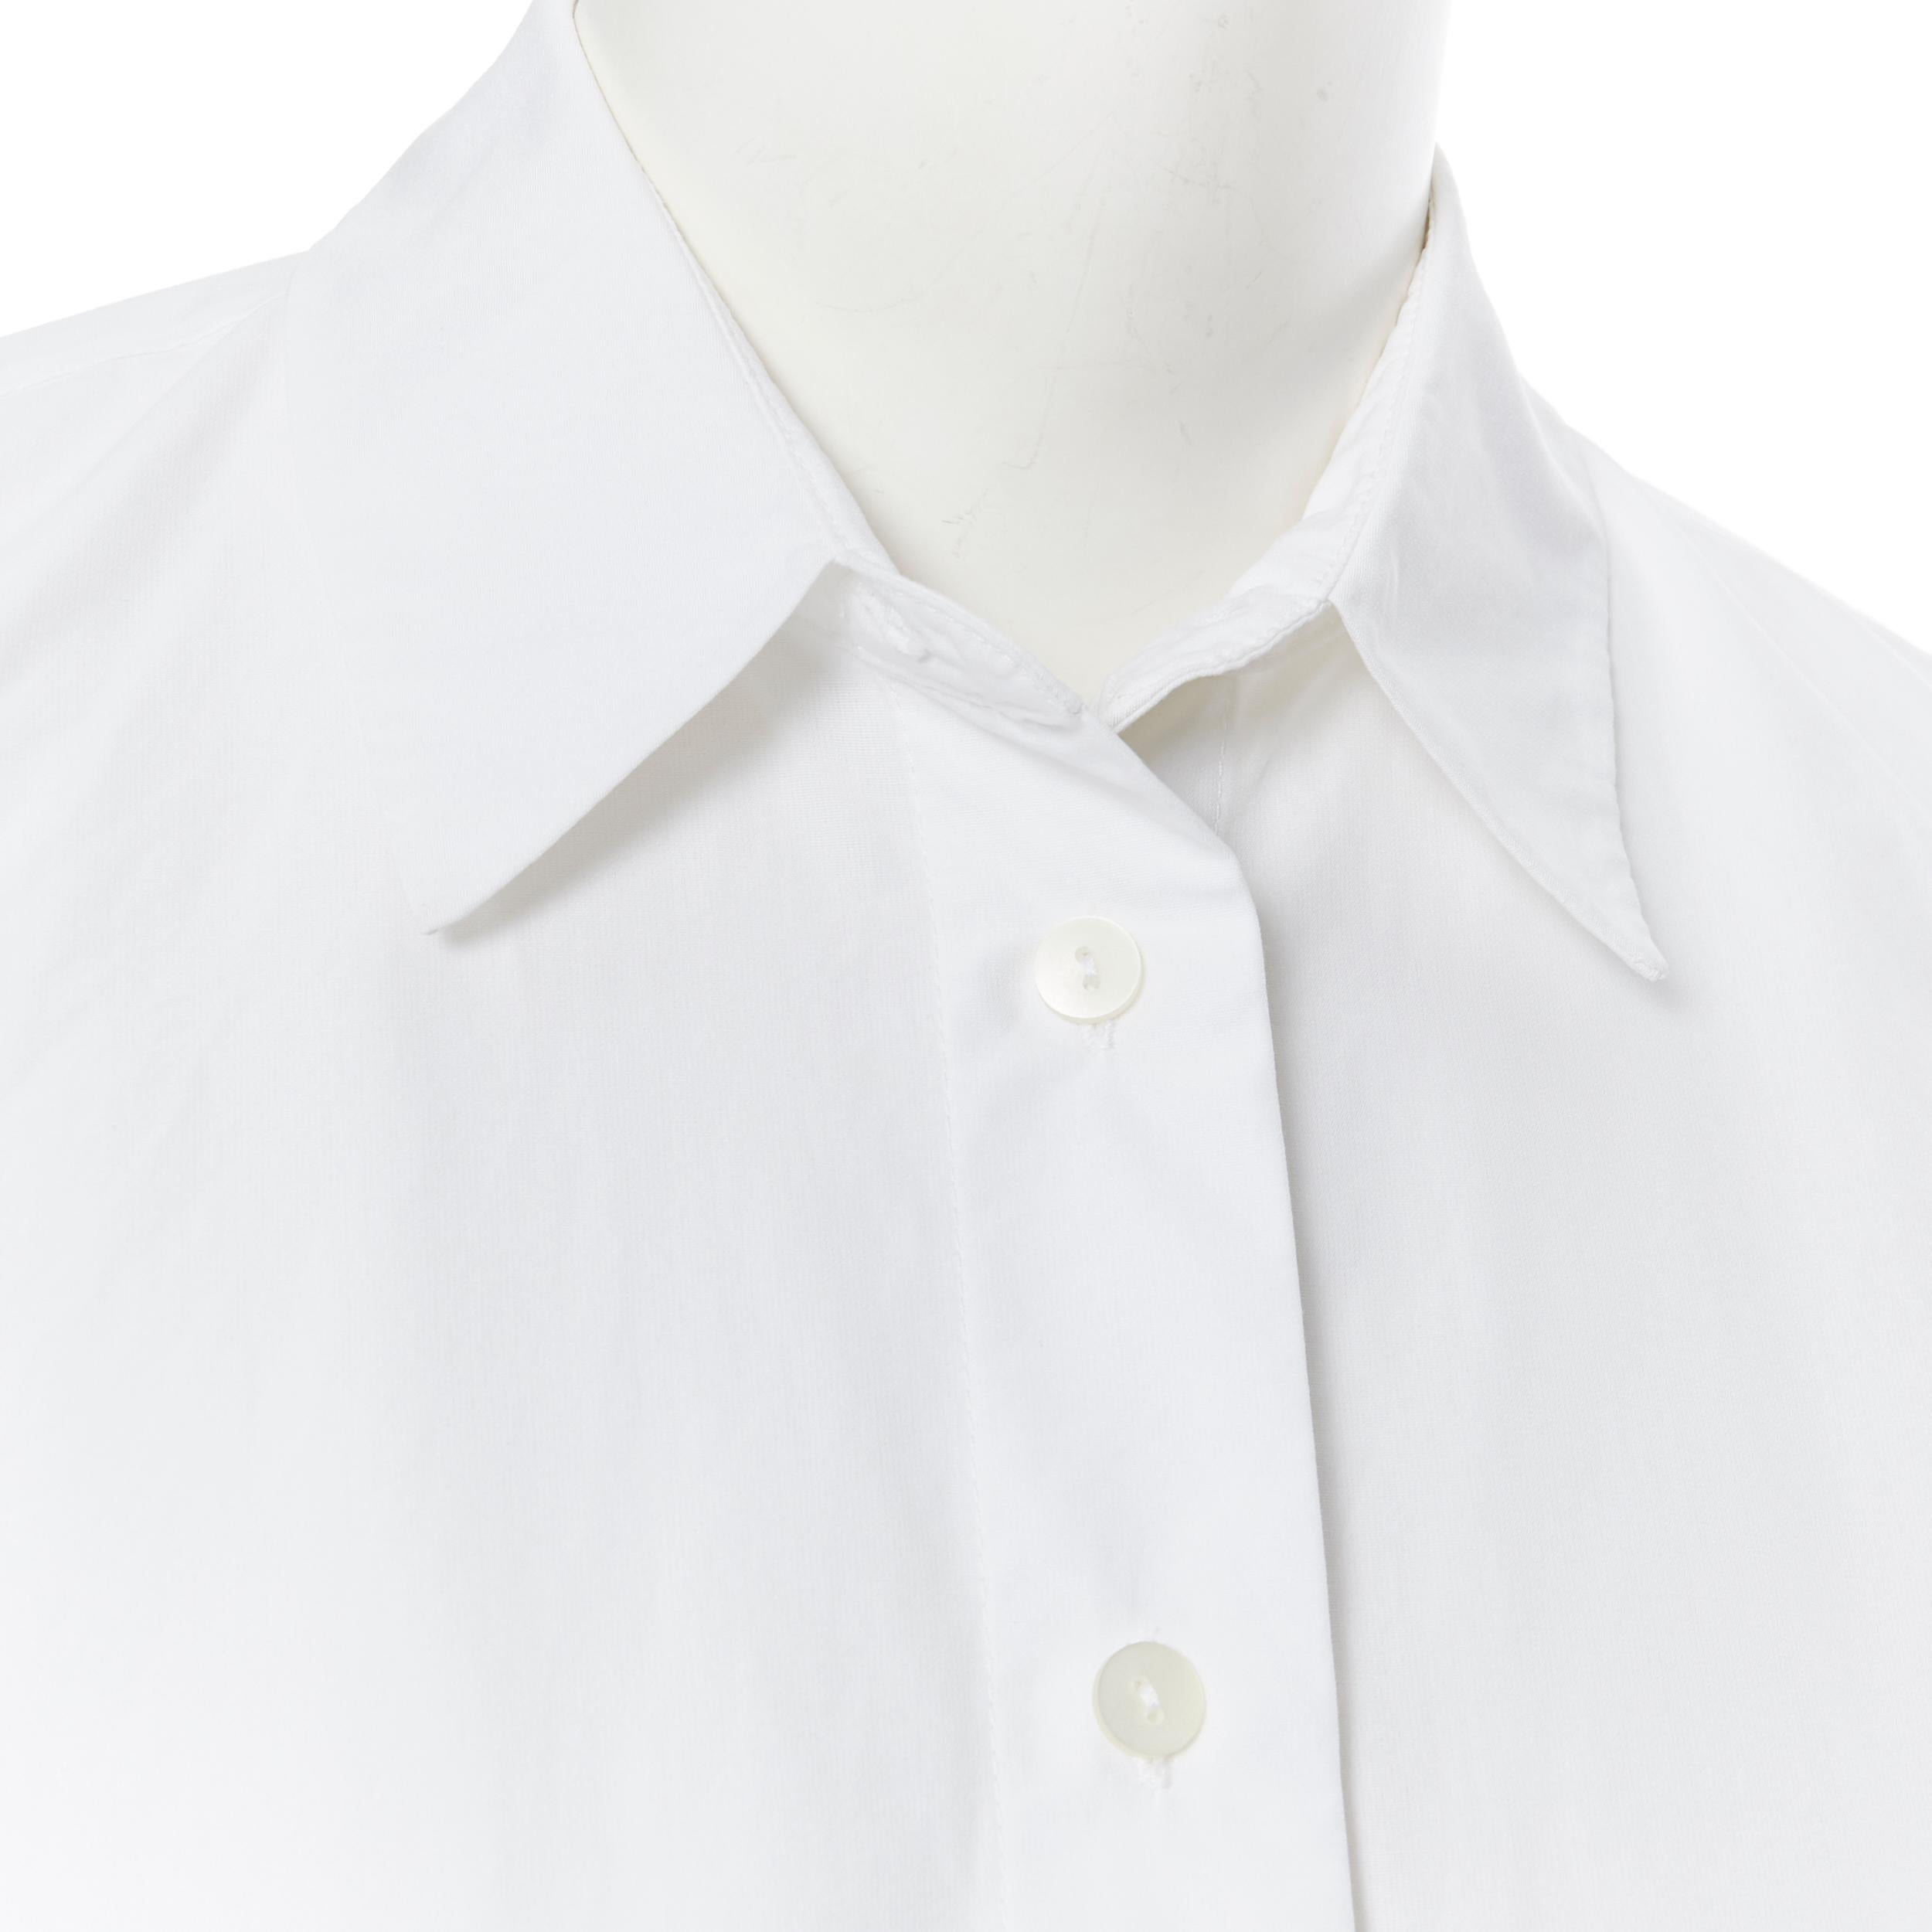 VICTORIA BECKHAM JEANS white cotton splt open back sleeveless shirt UK6 1